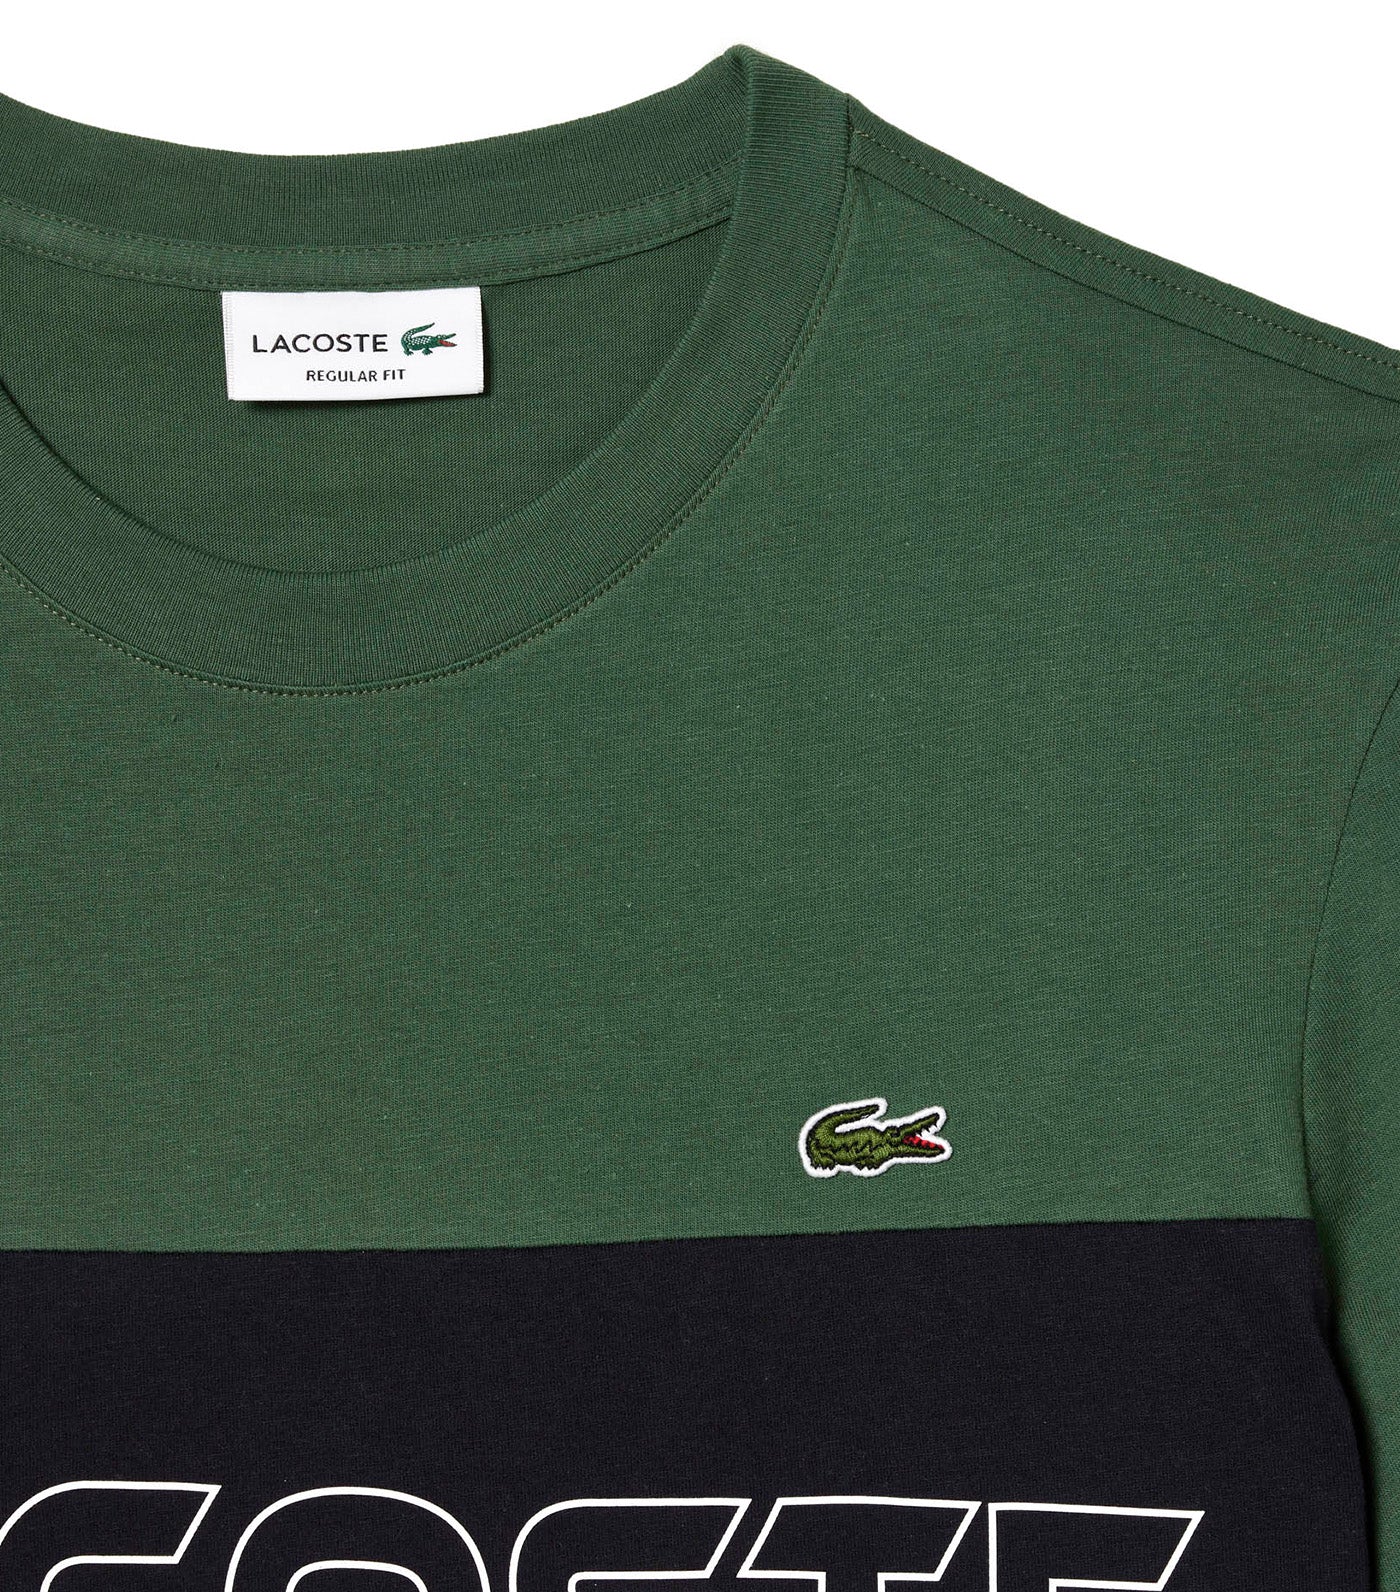 Lacoste Printed Colourblock T-Shirt Sequoia/Abysm Lacoste Fit Regular